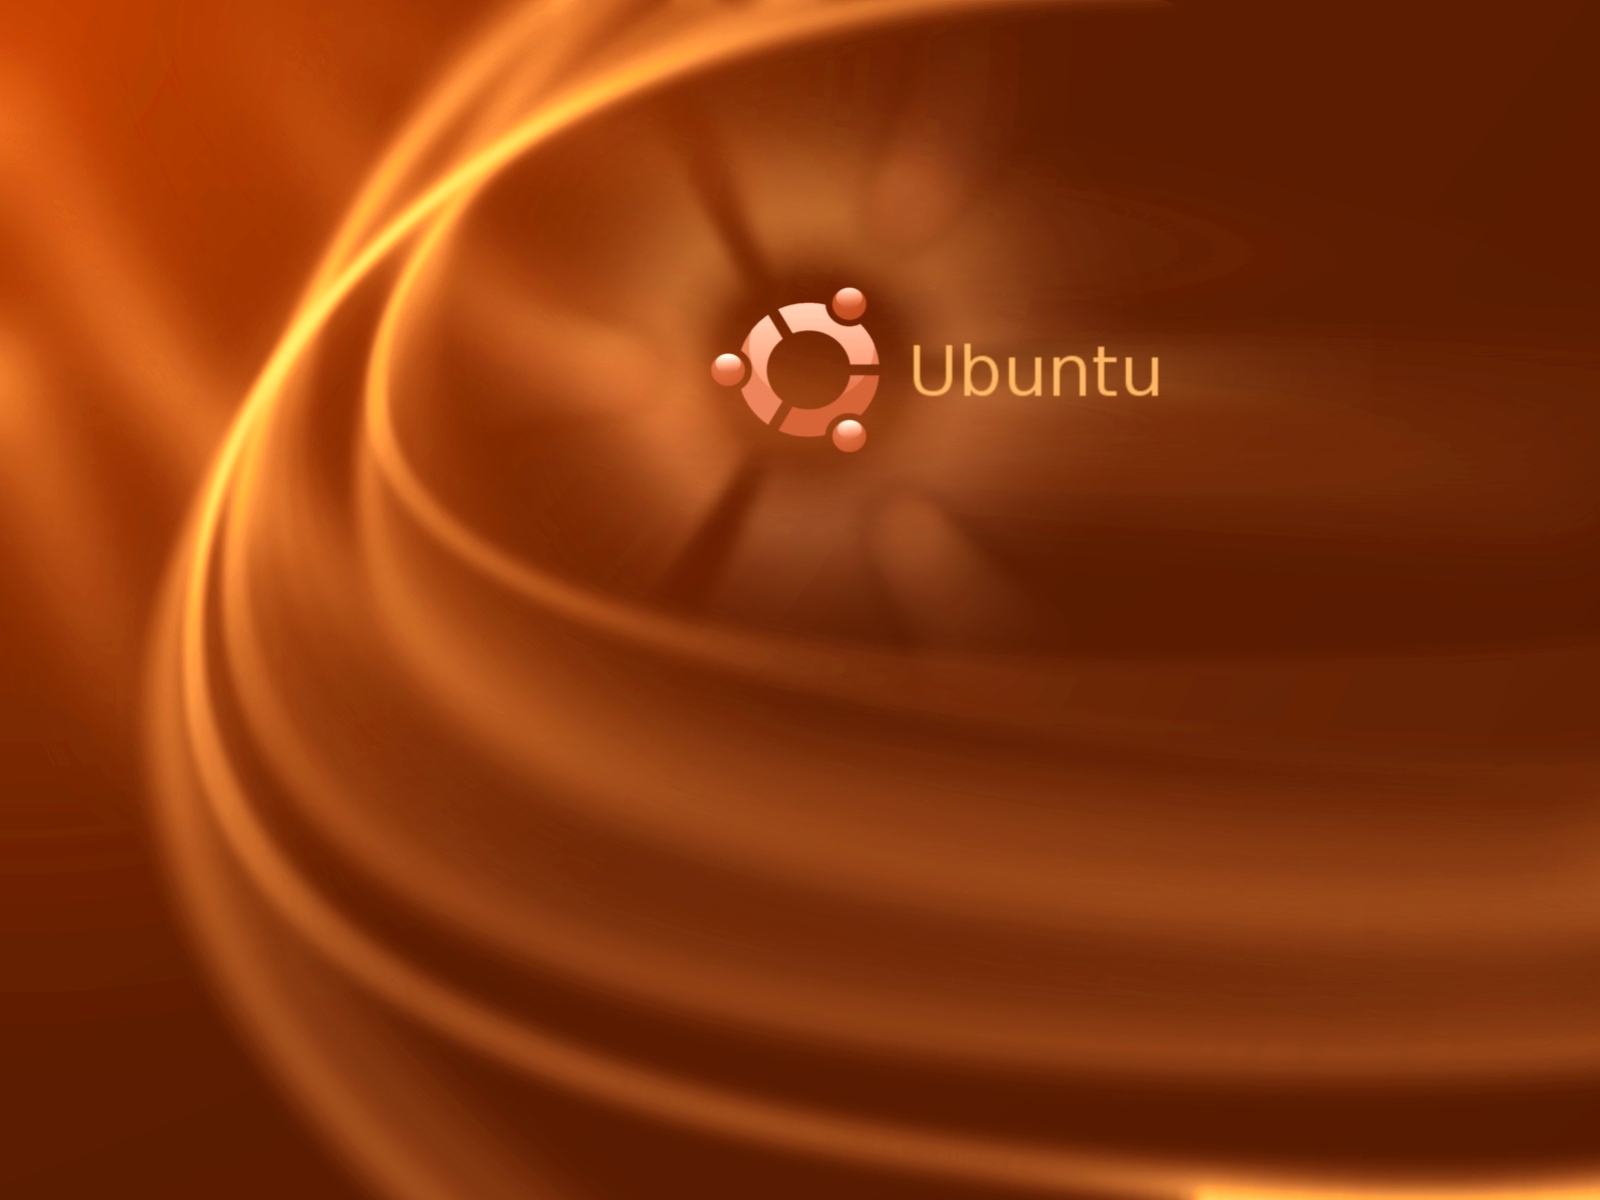  Incredible Ubuntu Wallpaper Collection Technosamrat